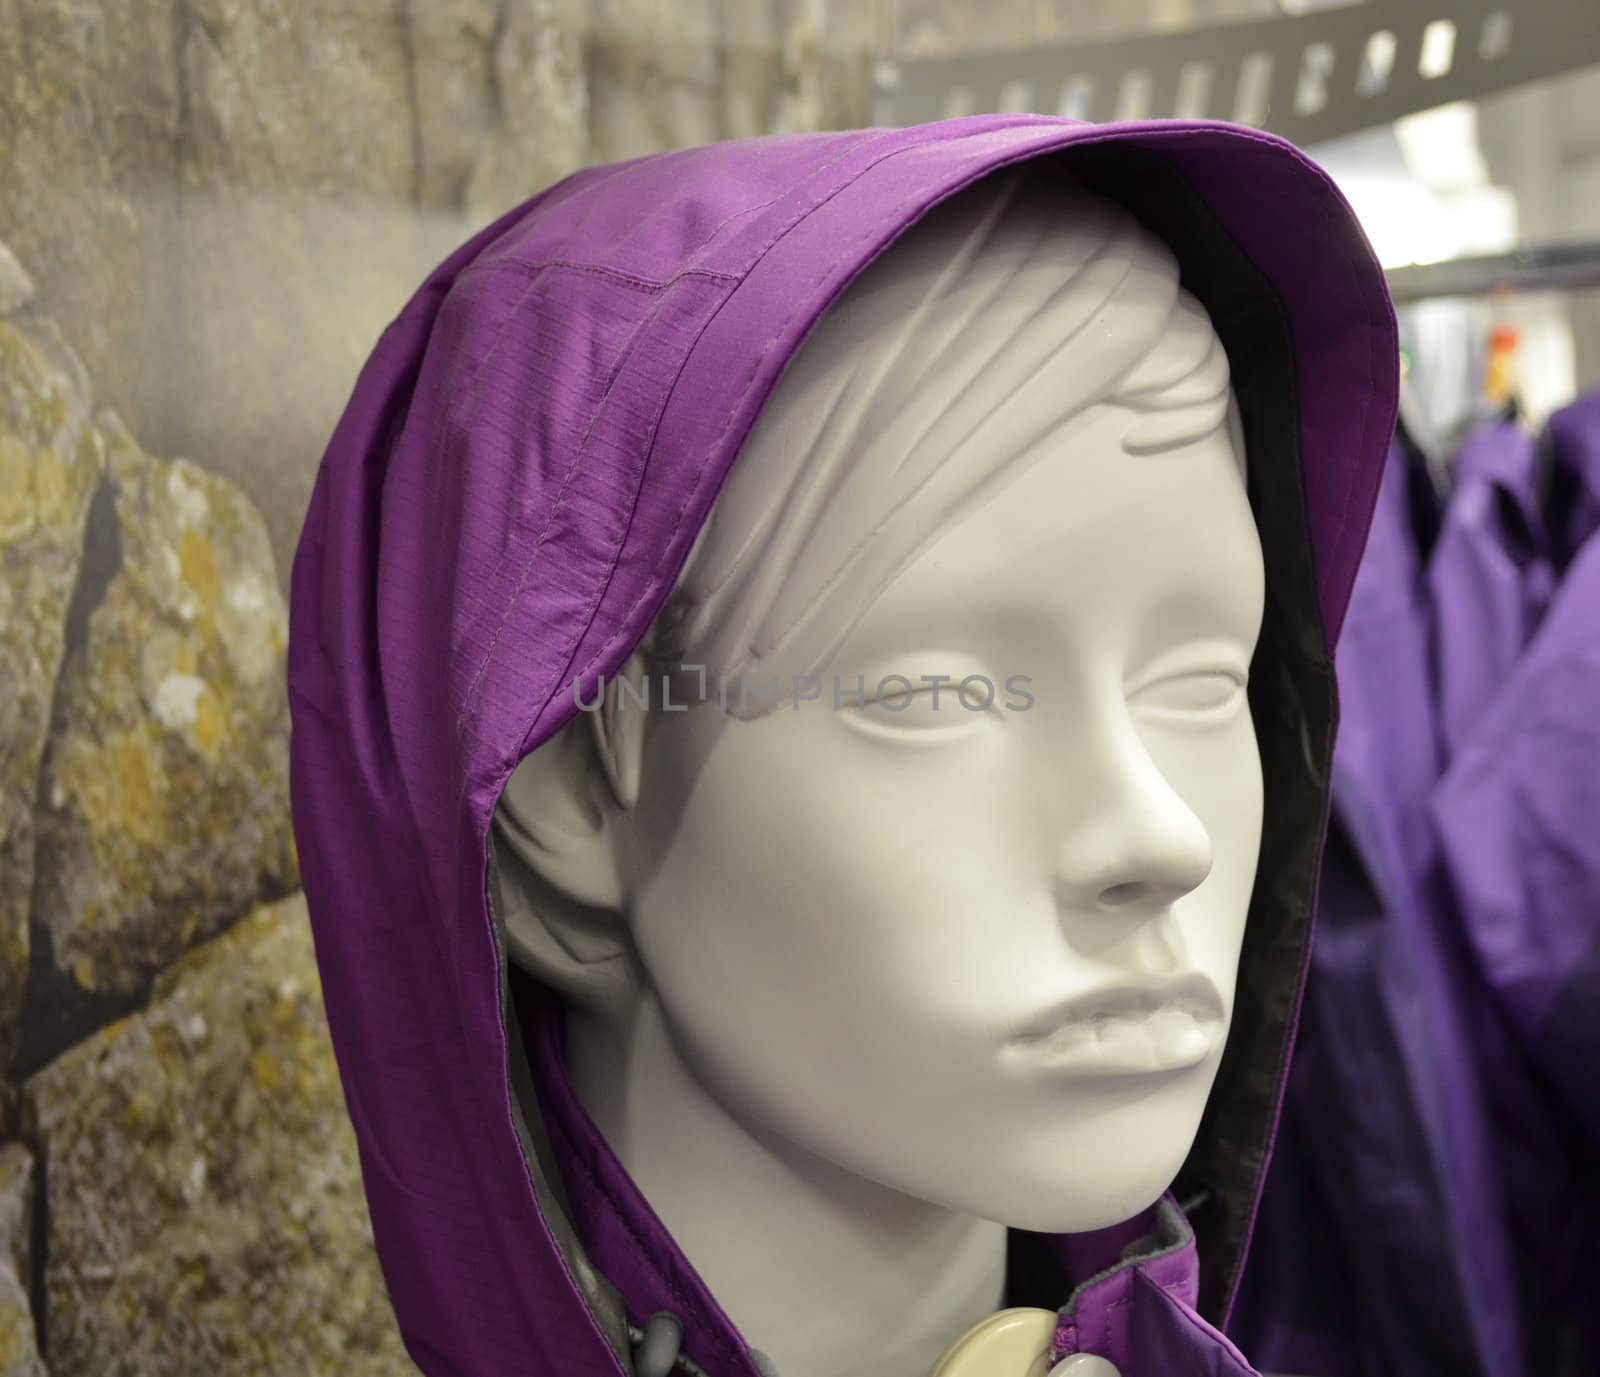 Close up of mannequin head wearing purple hood